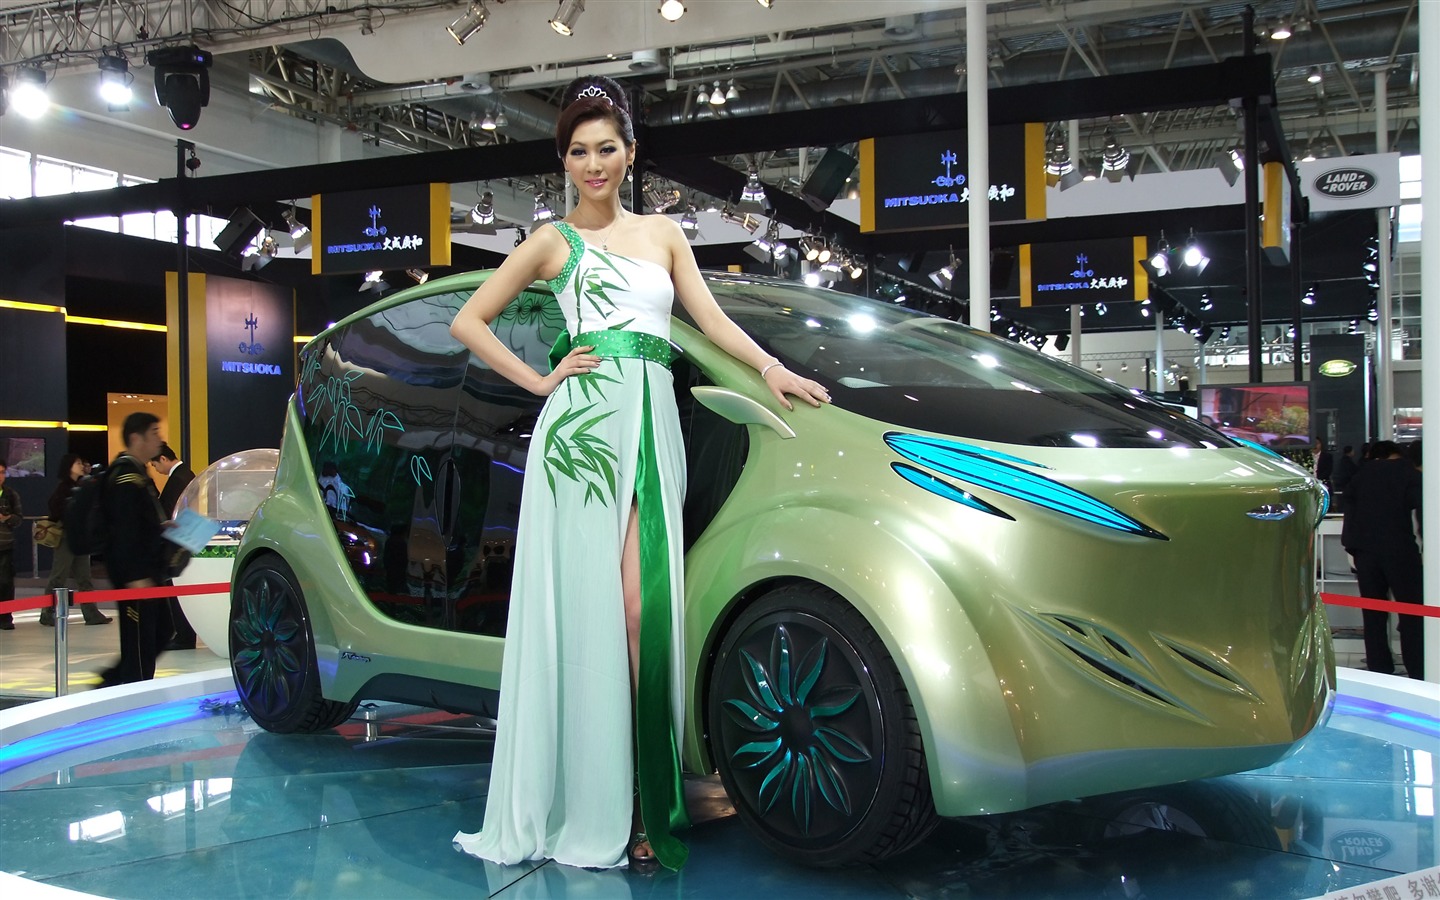 2010 Peking autosalonu modely aut odběrem (2) #2 - 1440x900